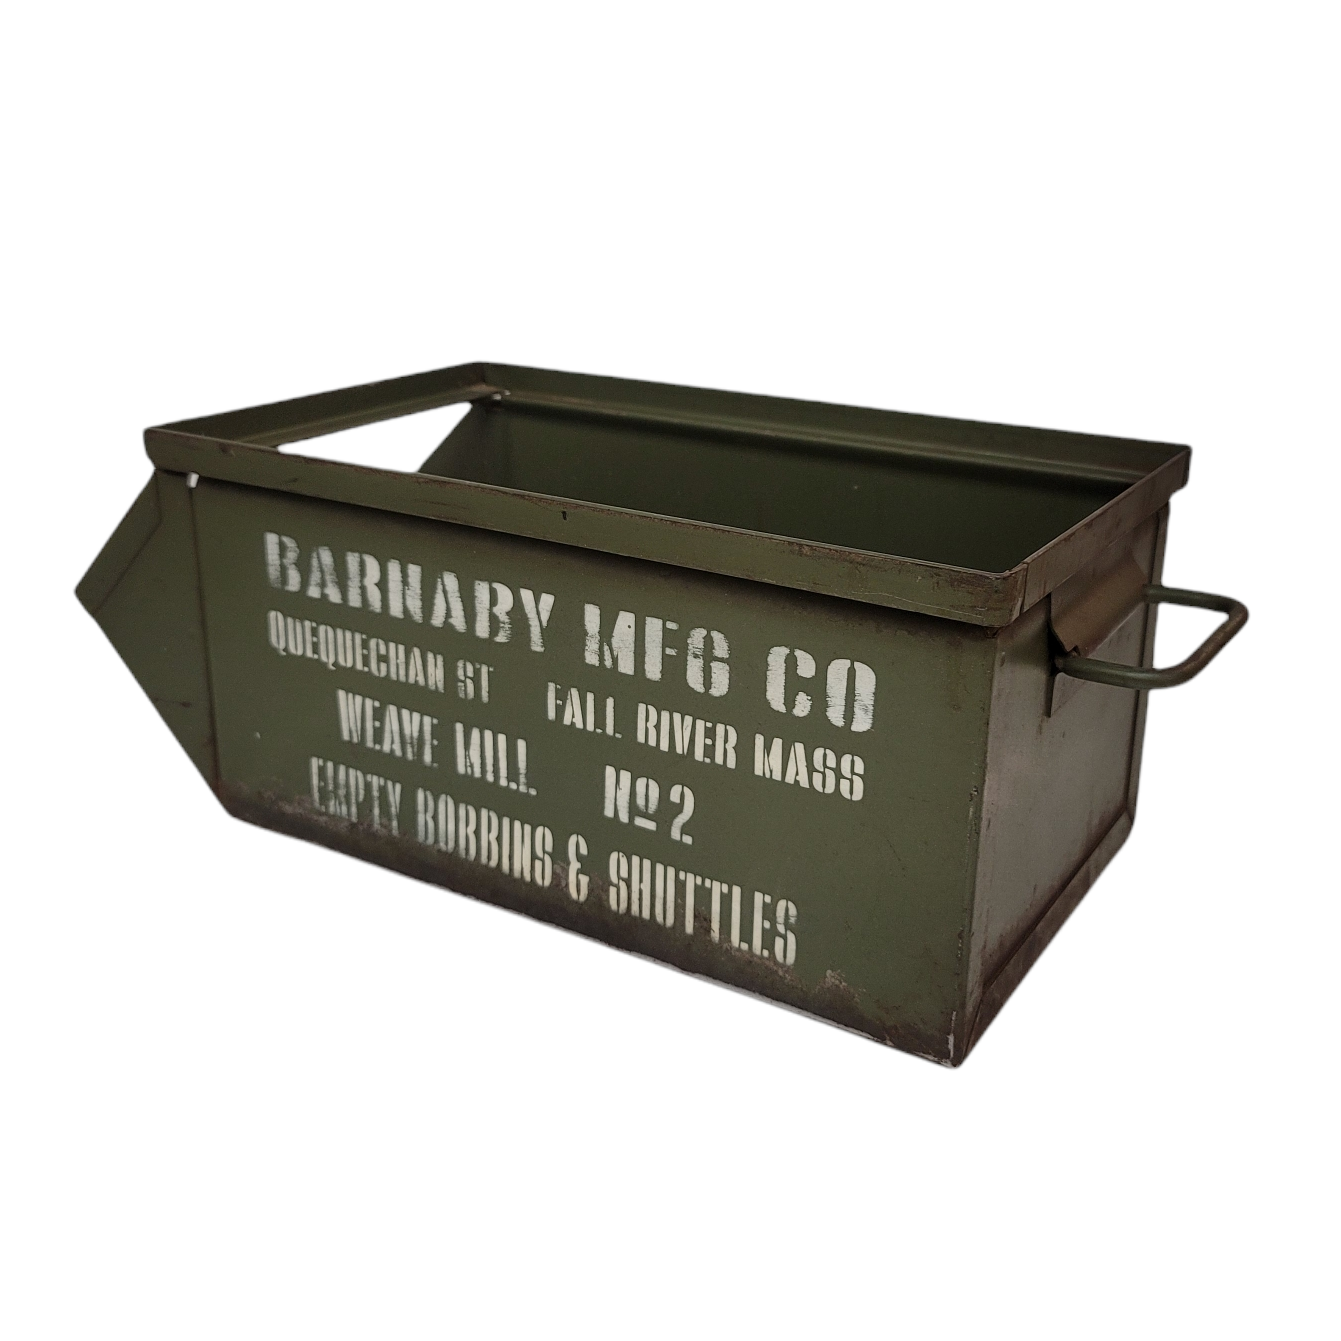 antique bin industrial metal box barnaby mfg co fall river mass textile mill bobbin and shuttle box